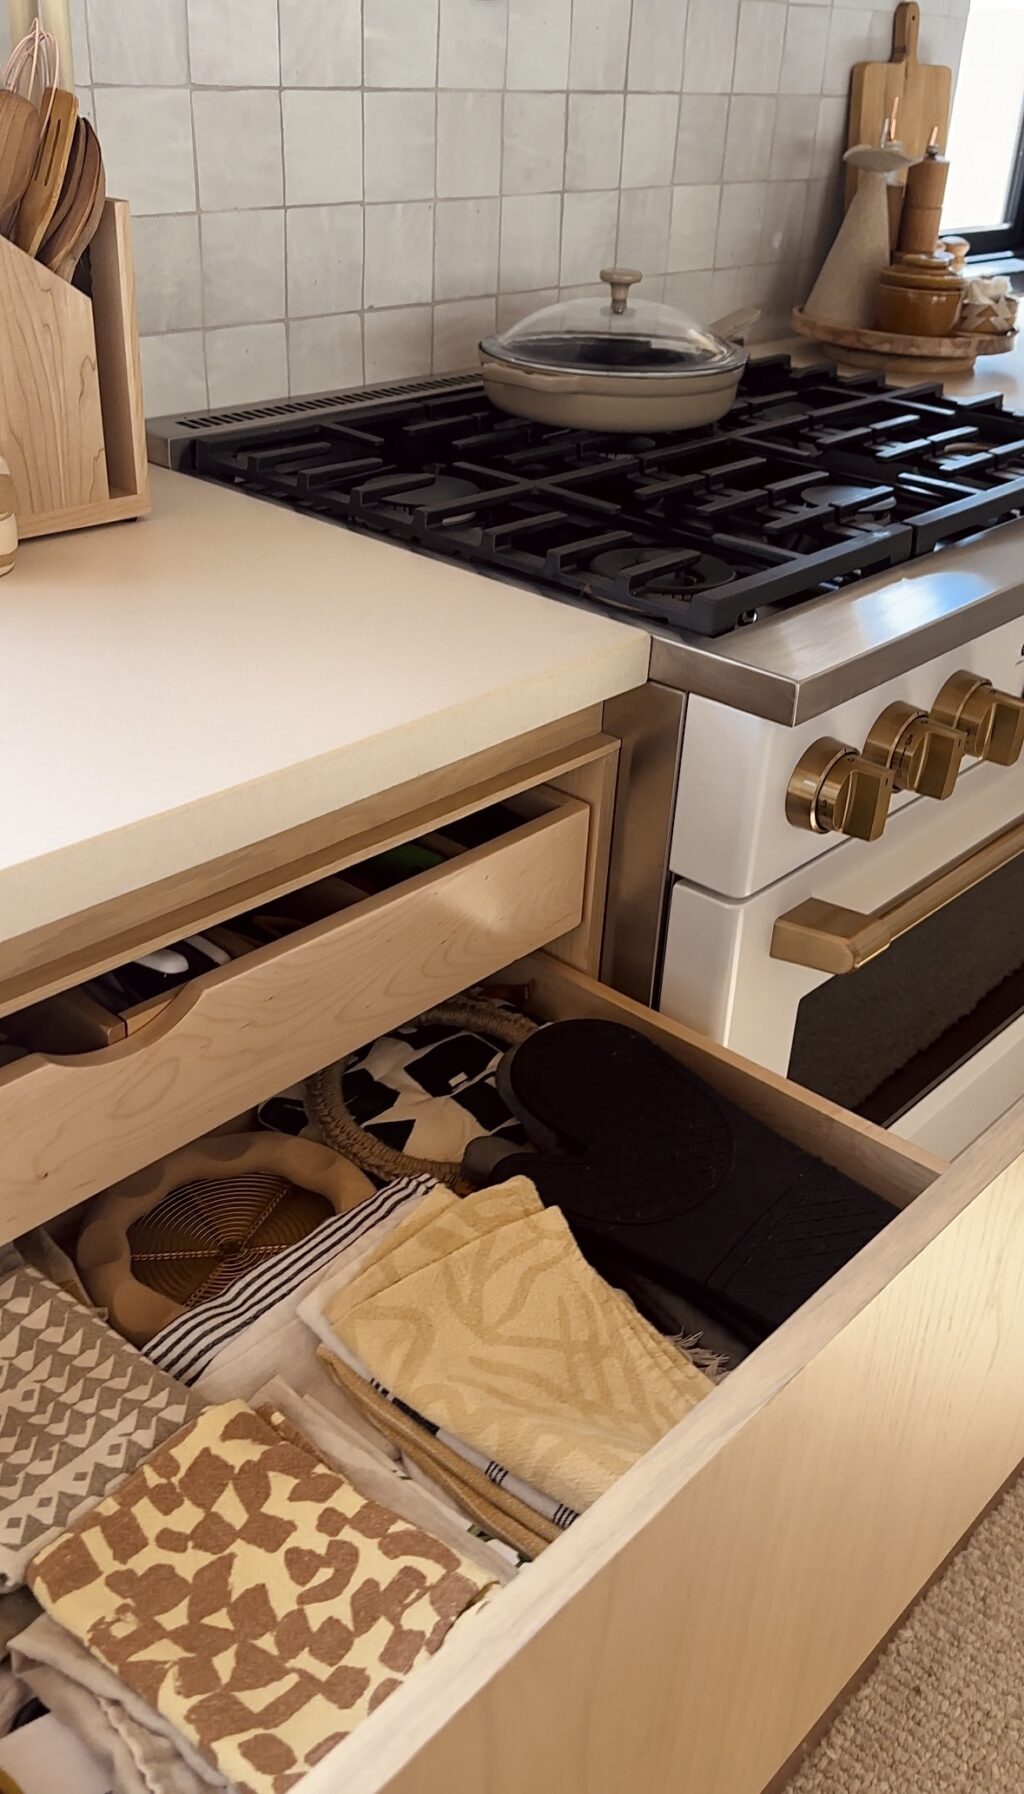 double drawers in kitchen - Kitchen Organization - Aesthetic Neutral Kitchen